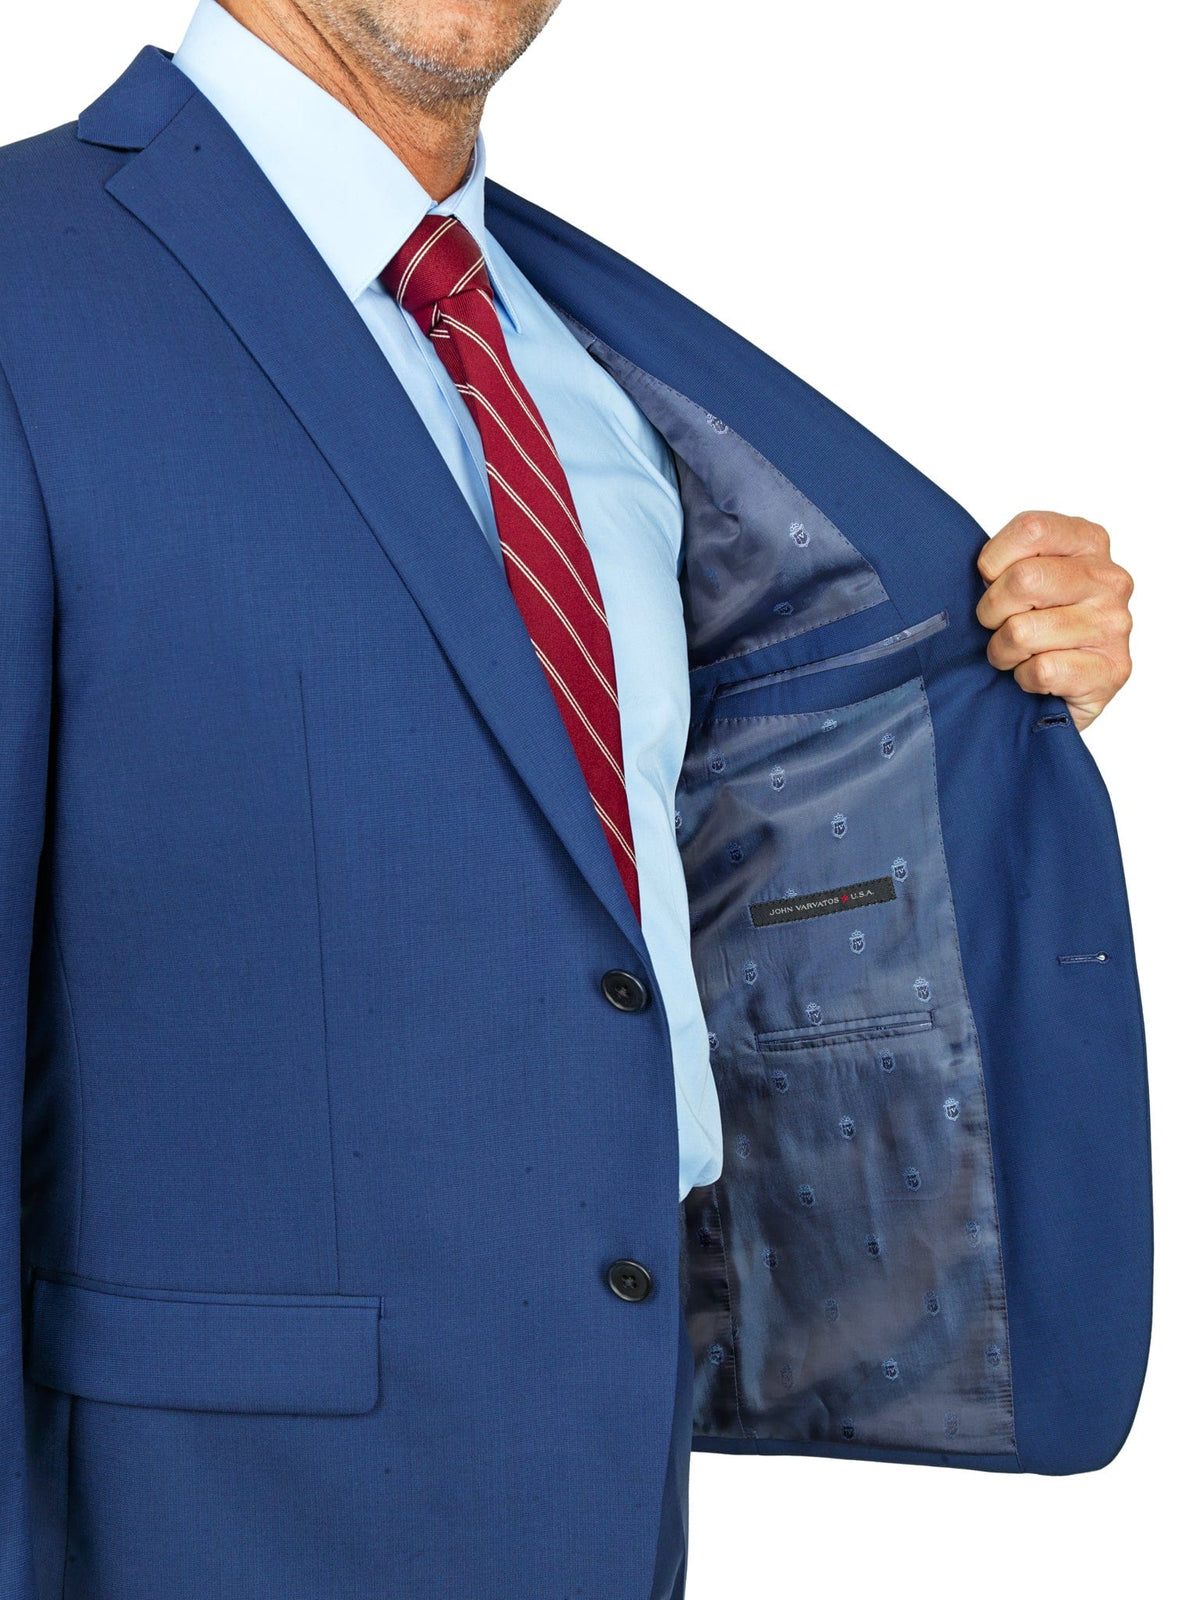 lining of blue John Varvatos suit jacket